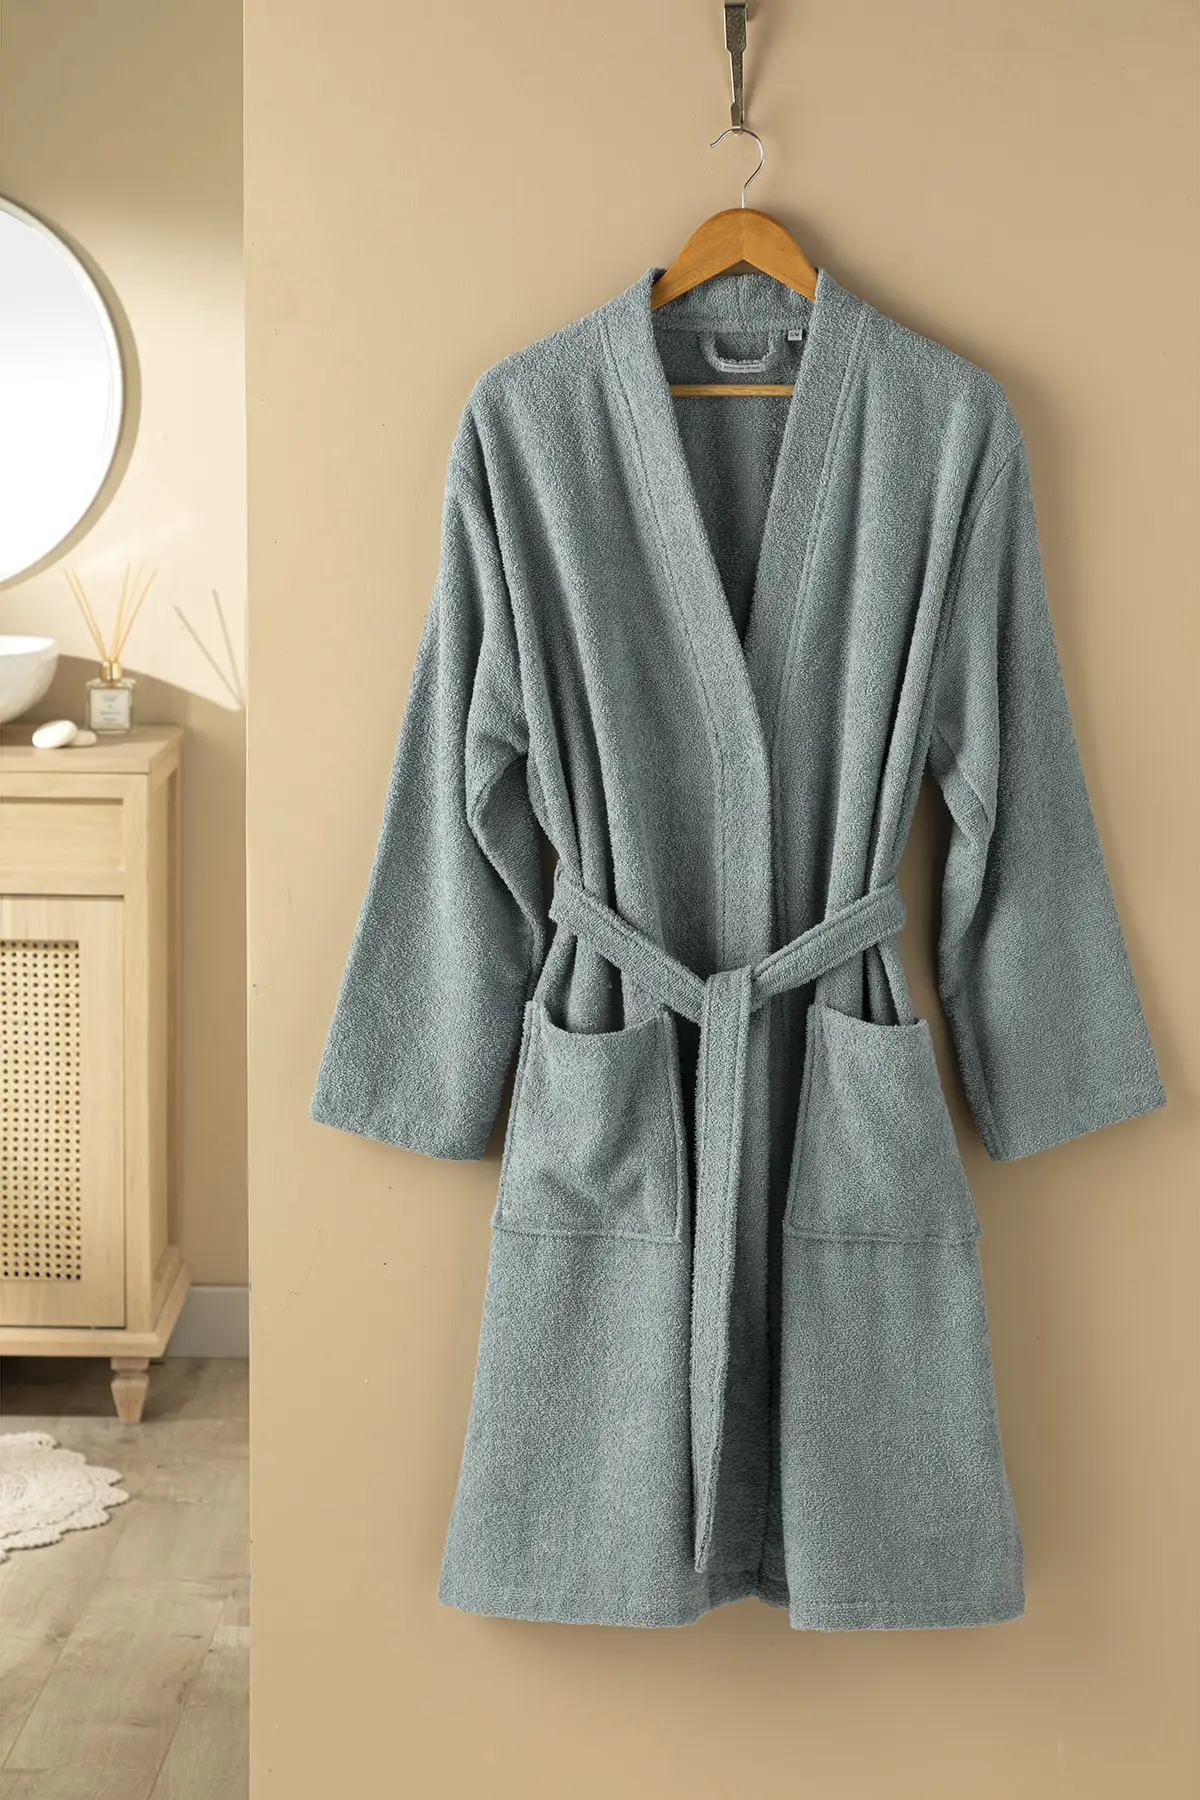 Cotton Men's Bathrobe L-xl Indigo - Bath Towels, Hotel Bathrobes, Hand Towels, 100% Cotton, Bathroom Products